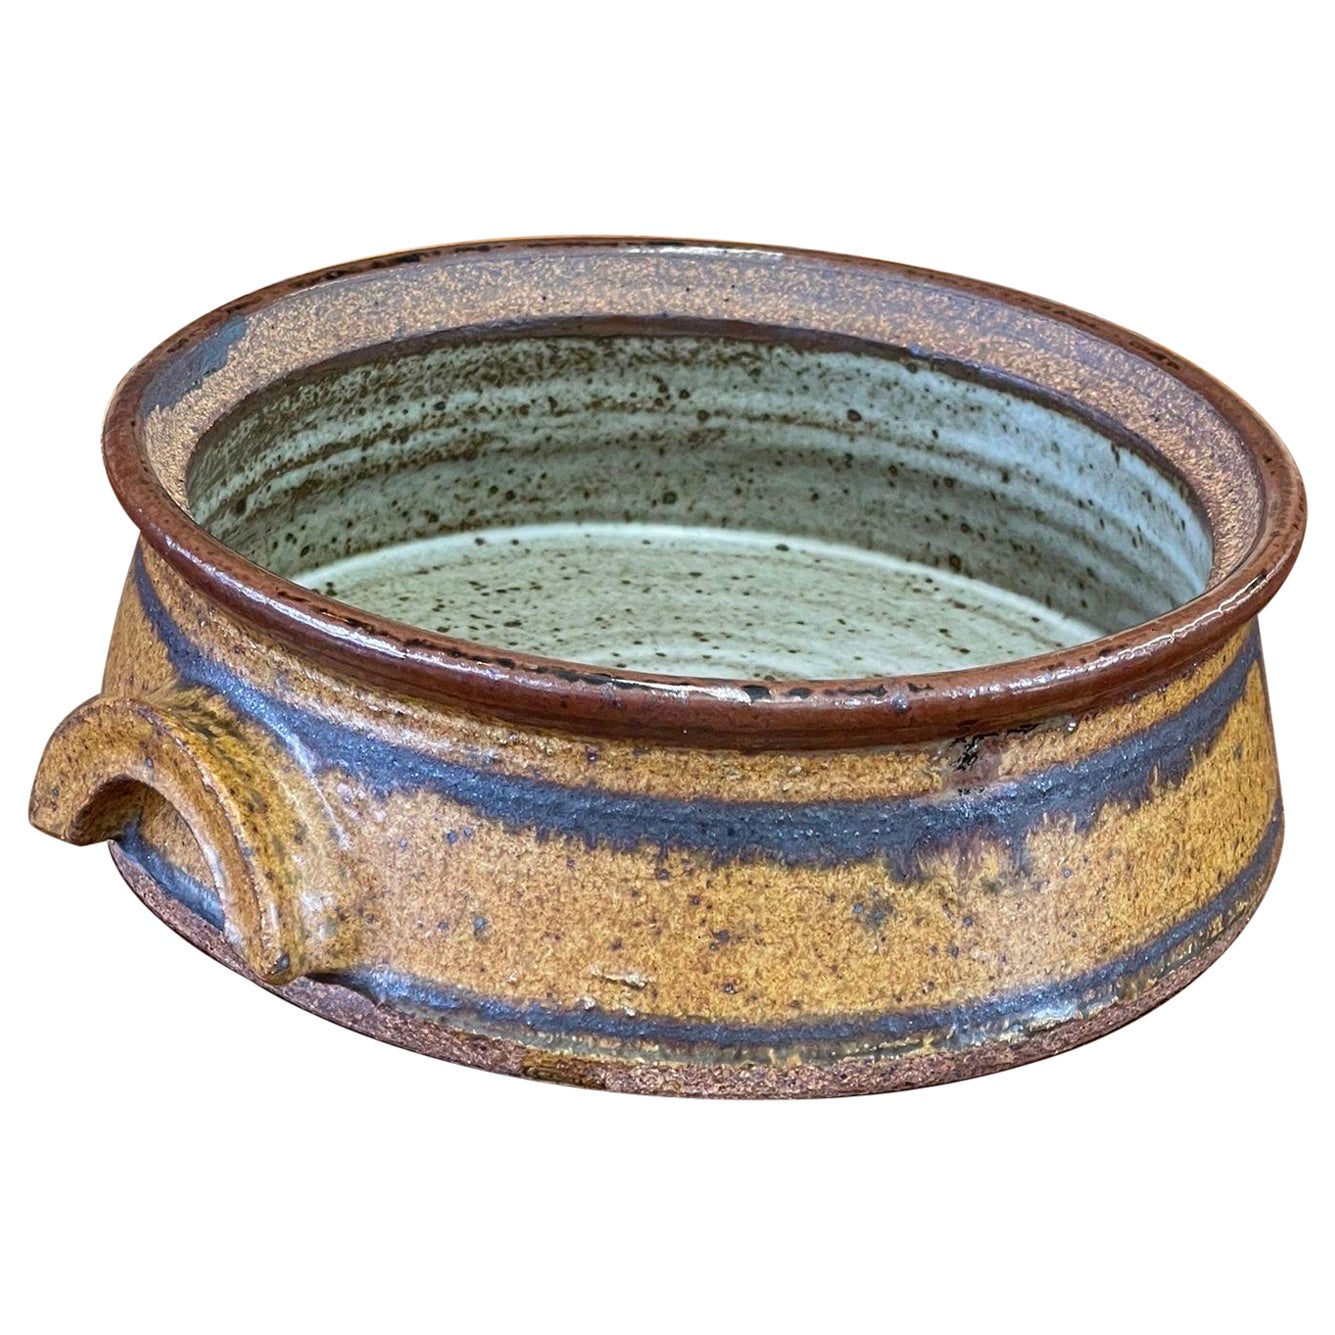 Unique Speckled Stoneware Bowl For Sale